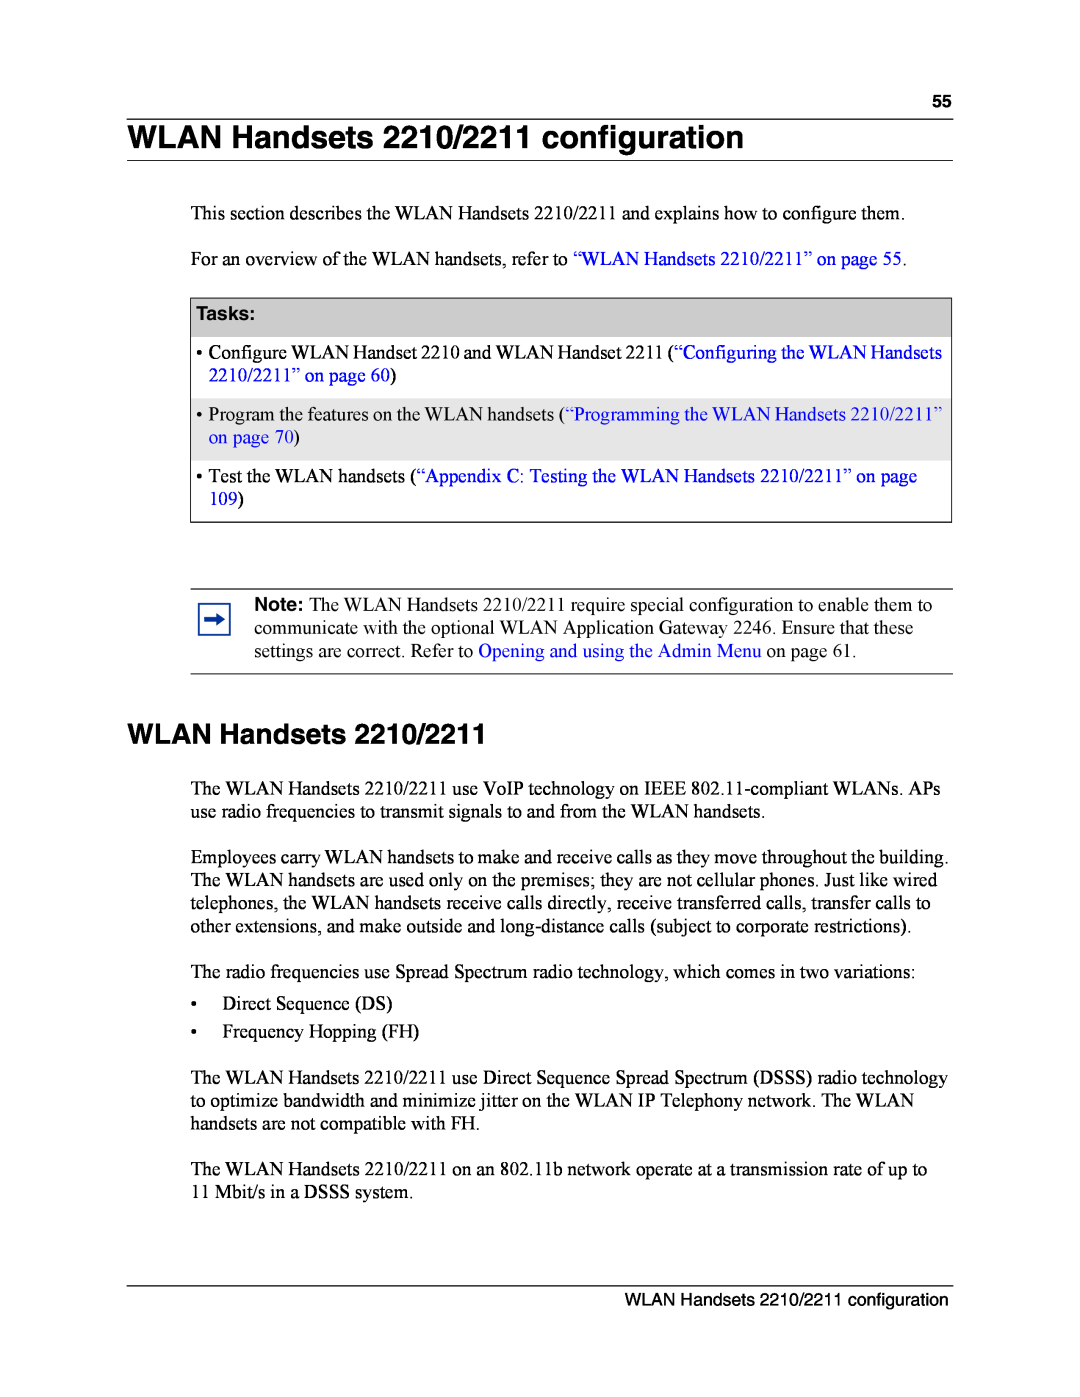 Nortel Networks MOG6xx, MOG7xx manual WLAN Handsets 2210/2211 configuration, Tasks 